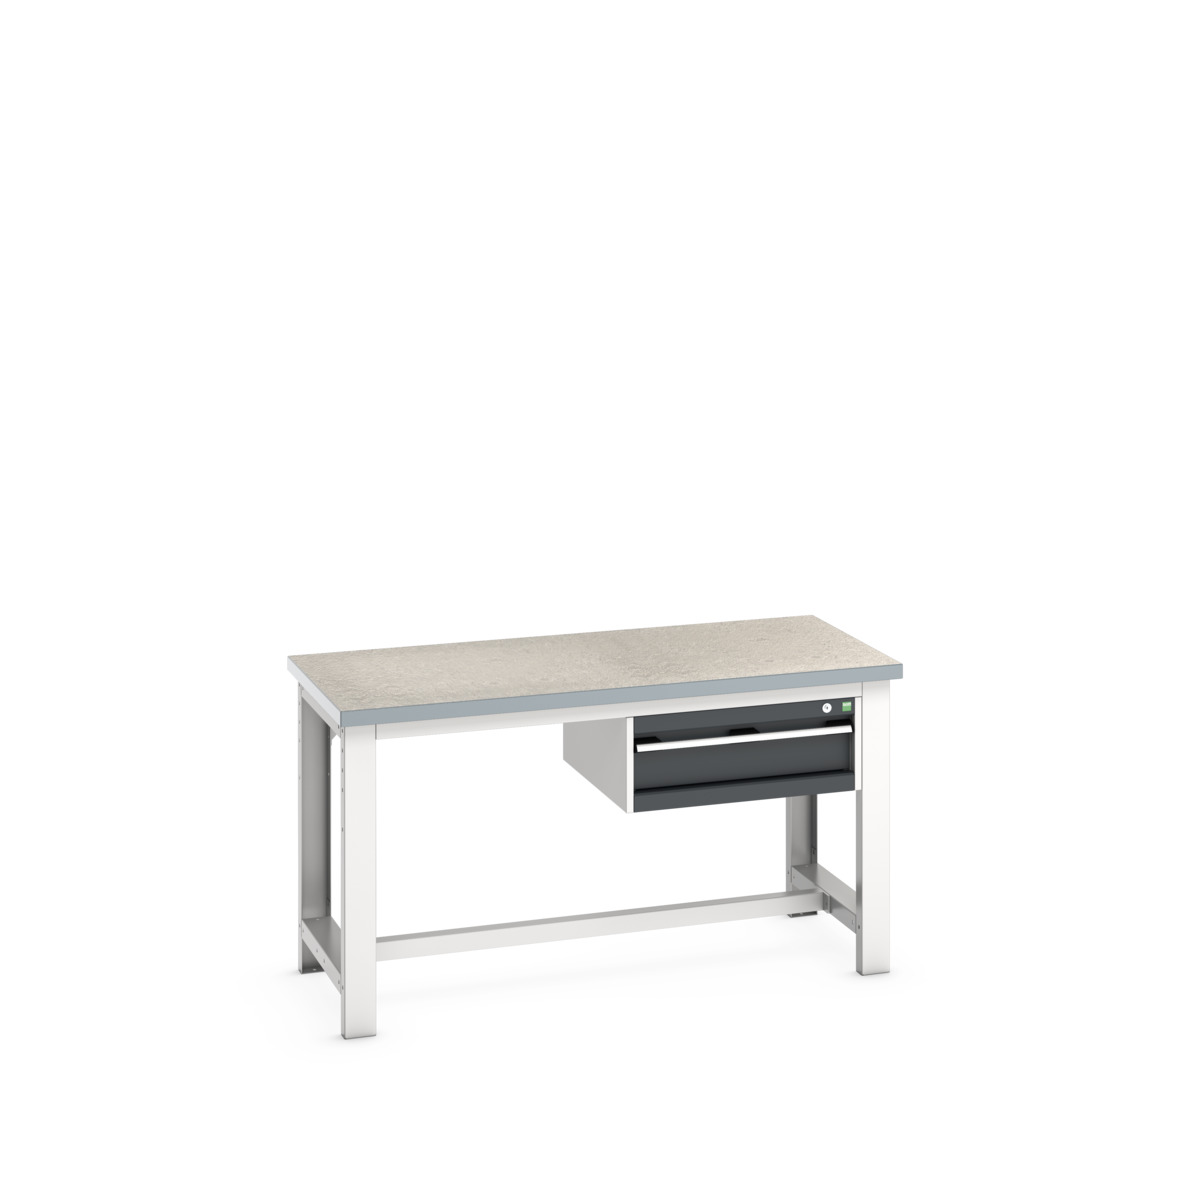 41003397. - cubio framework bench (lino) 